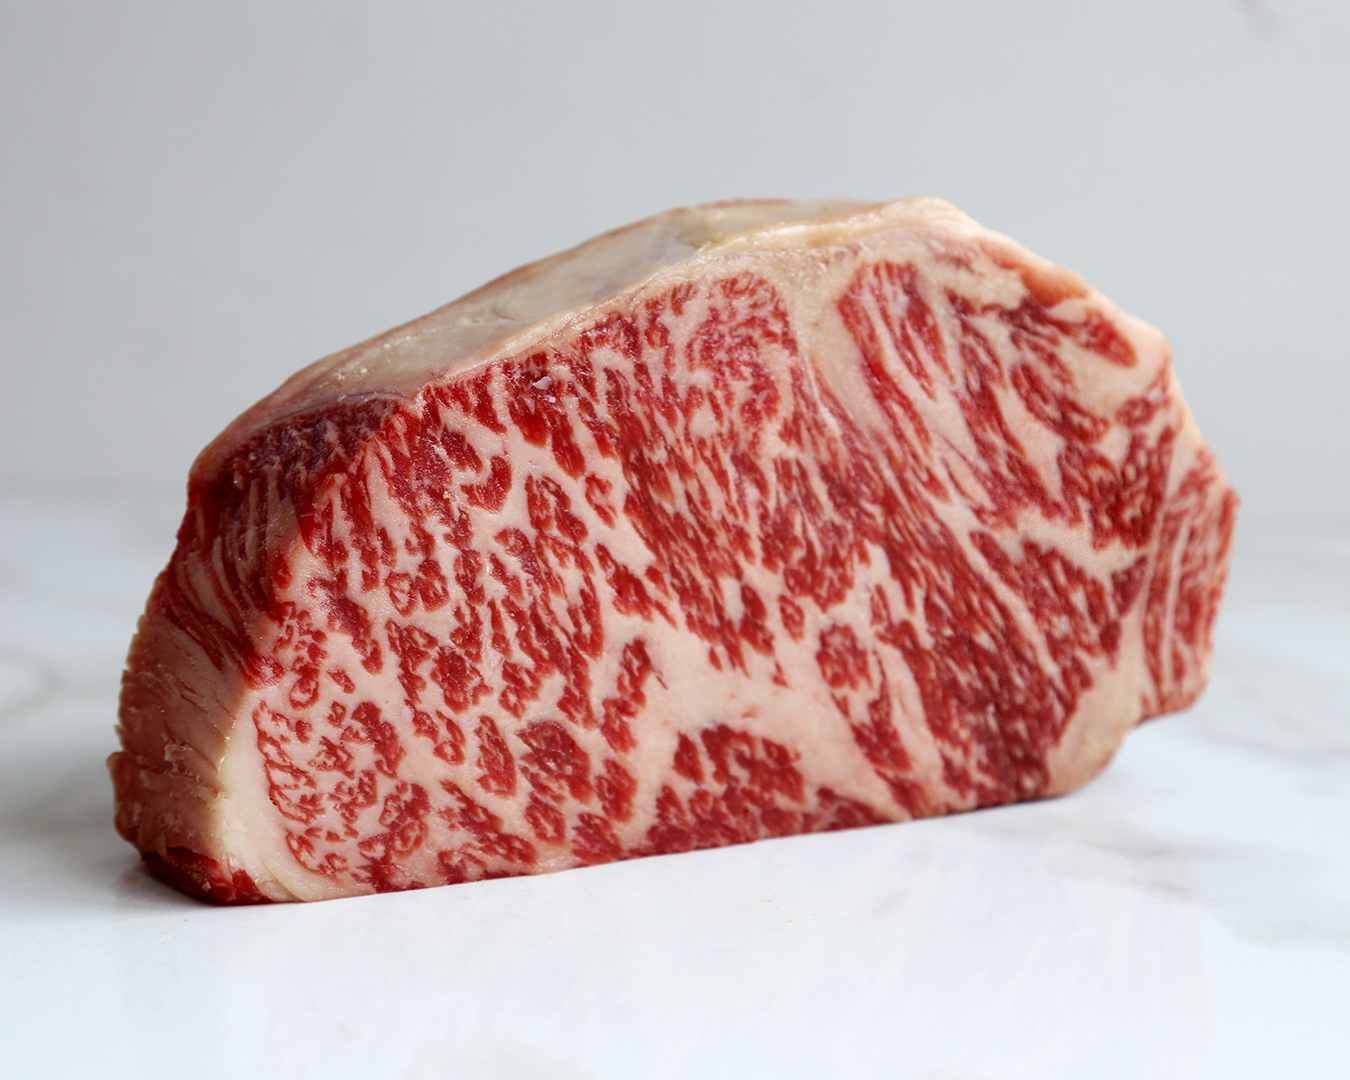 American Wagyu Beef NY Strip Steak BMS 9+